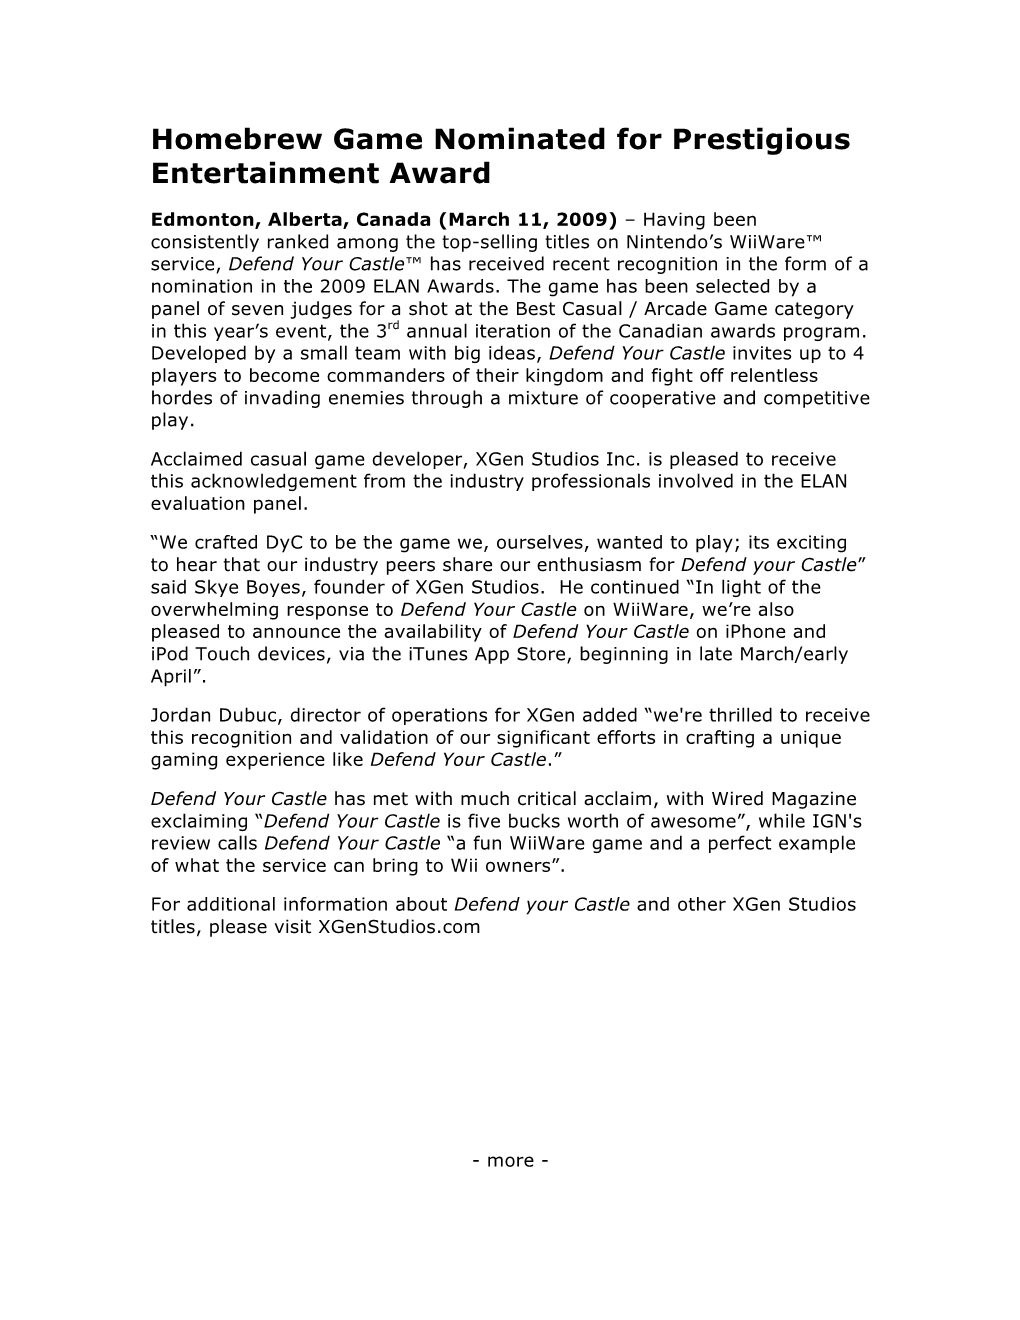 Homebrew Game Nominated for Prestigious Entertainment Award